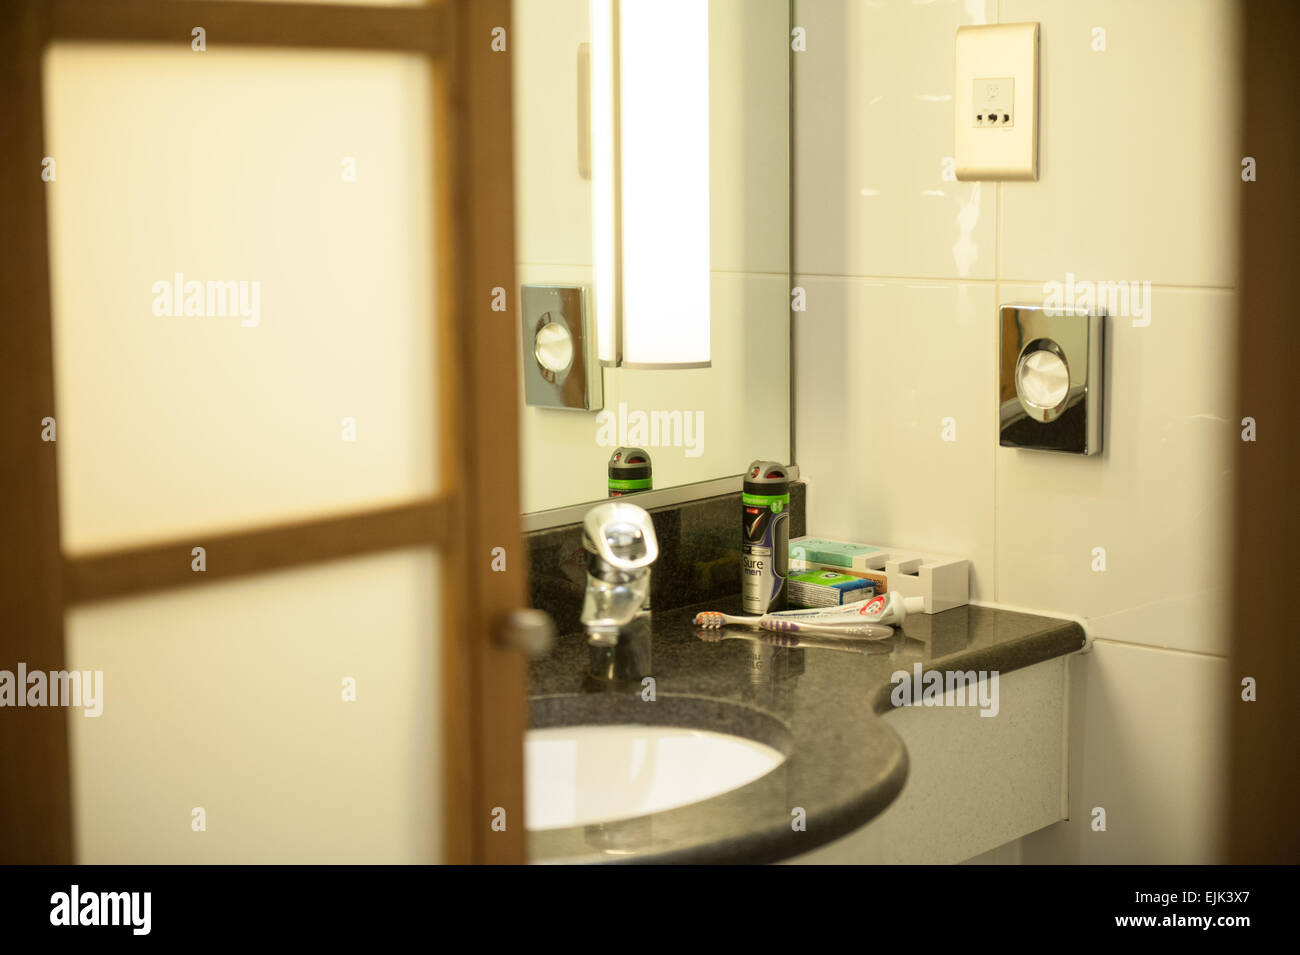 Novotel hotel room bathroom Stock Photo